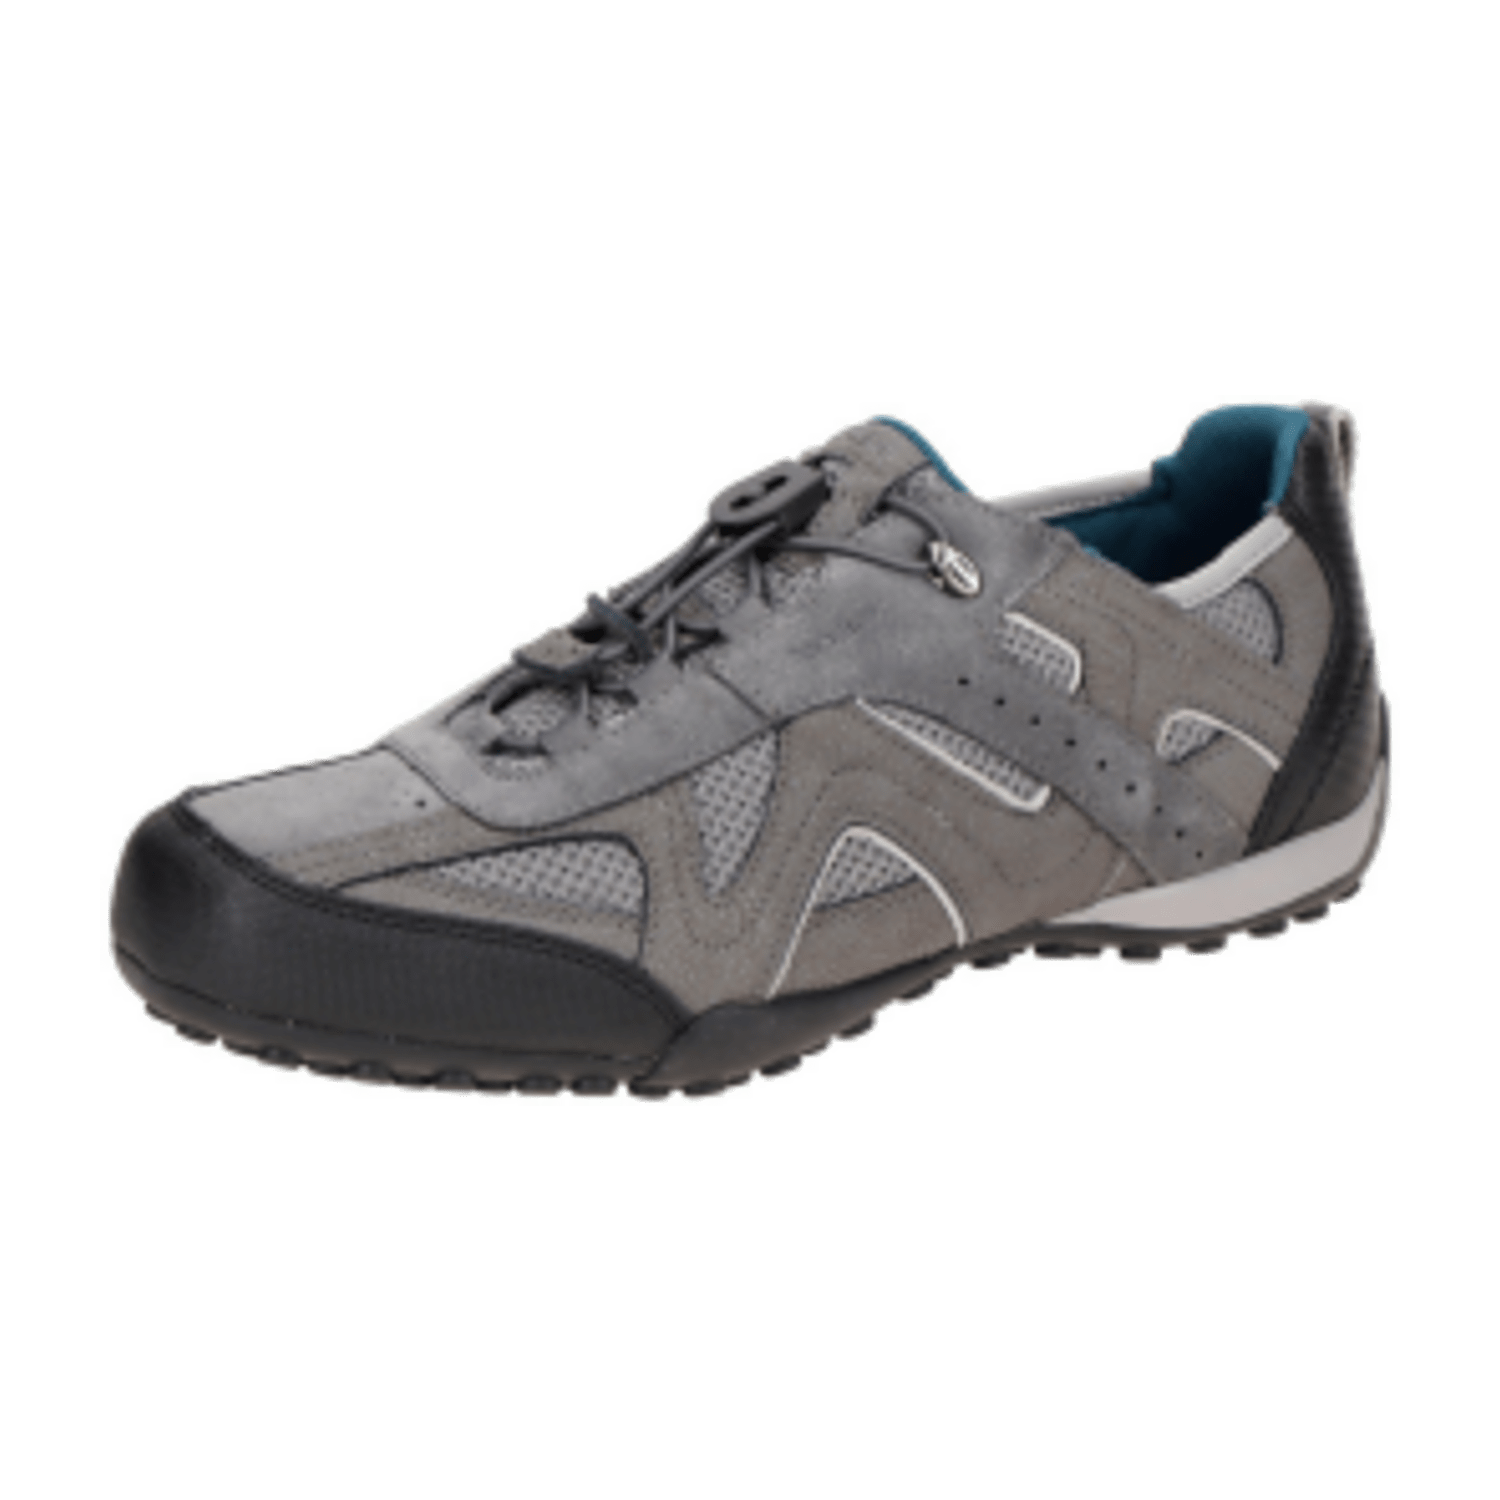 Geox Snake Sneaker Schuhe grau stone U2507B